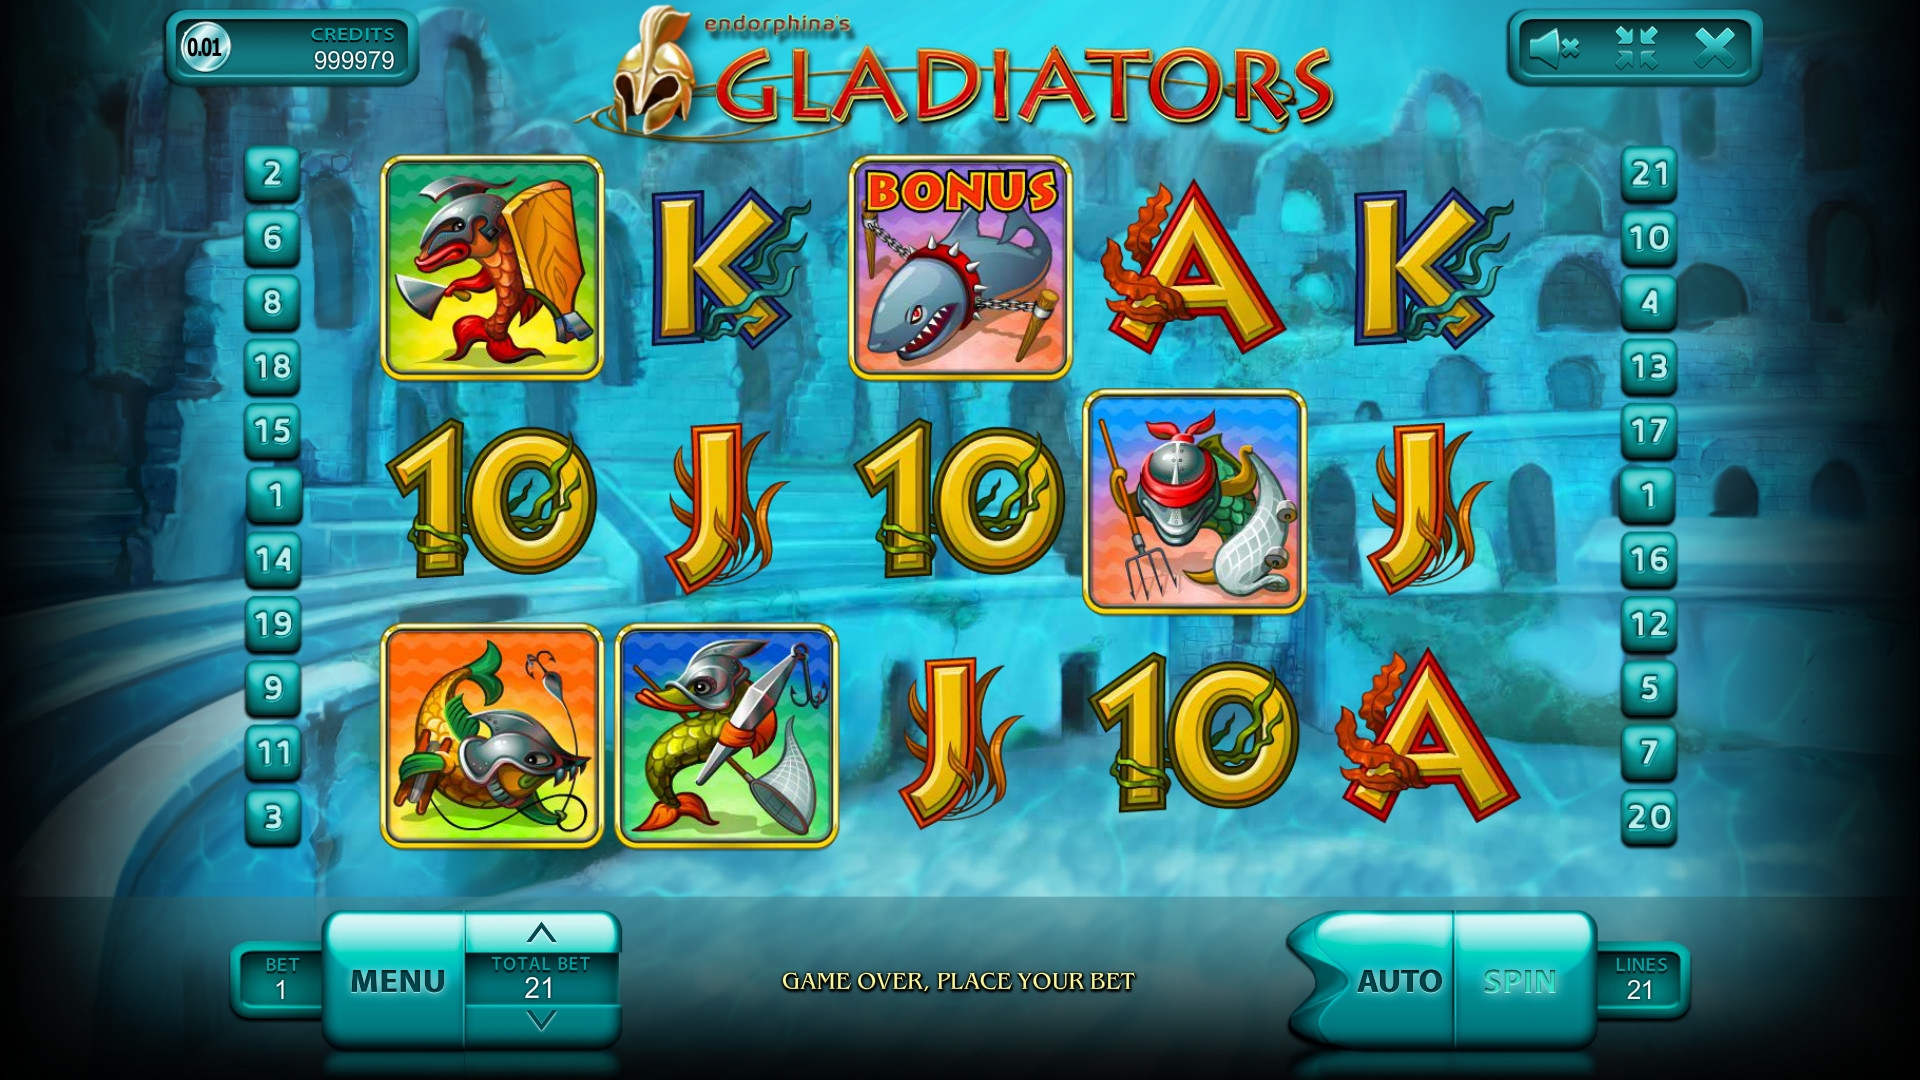 Gladiators (Gladiators) from category Slots